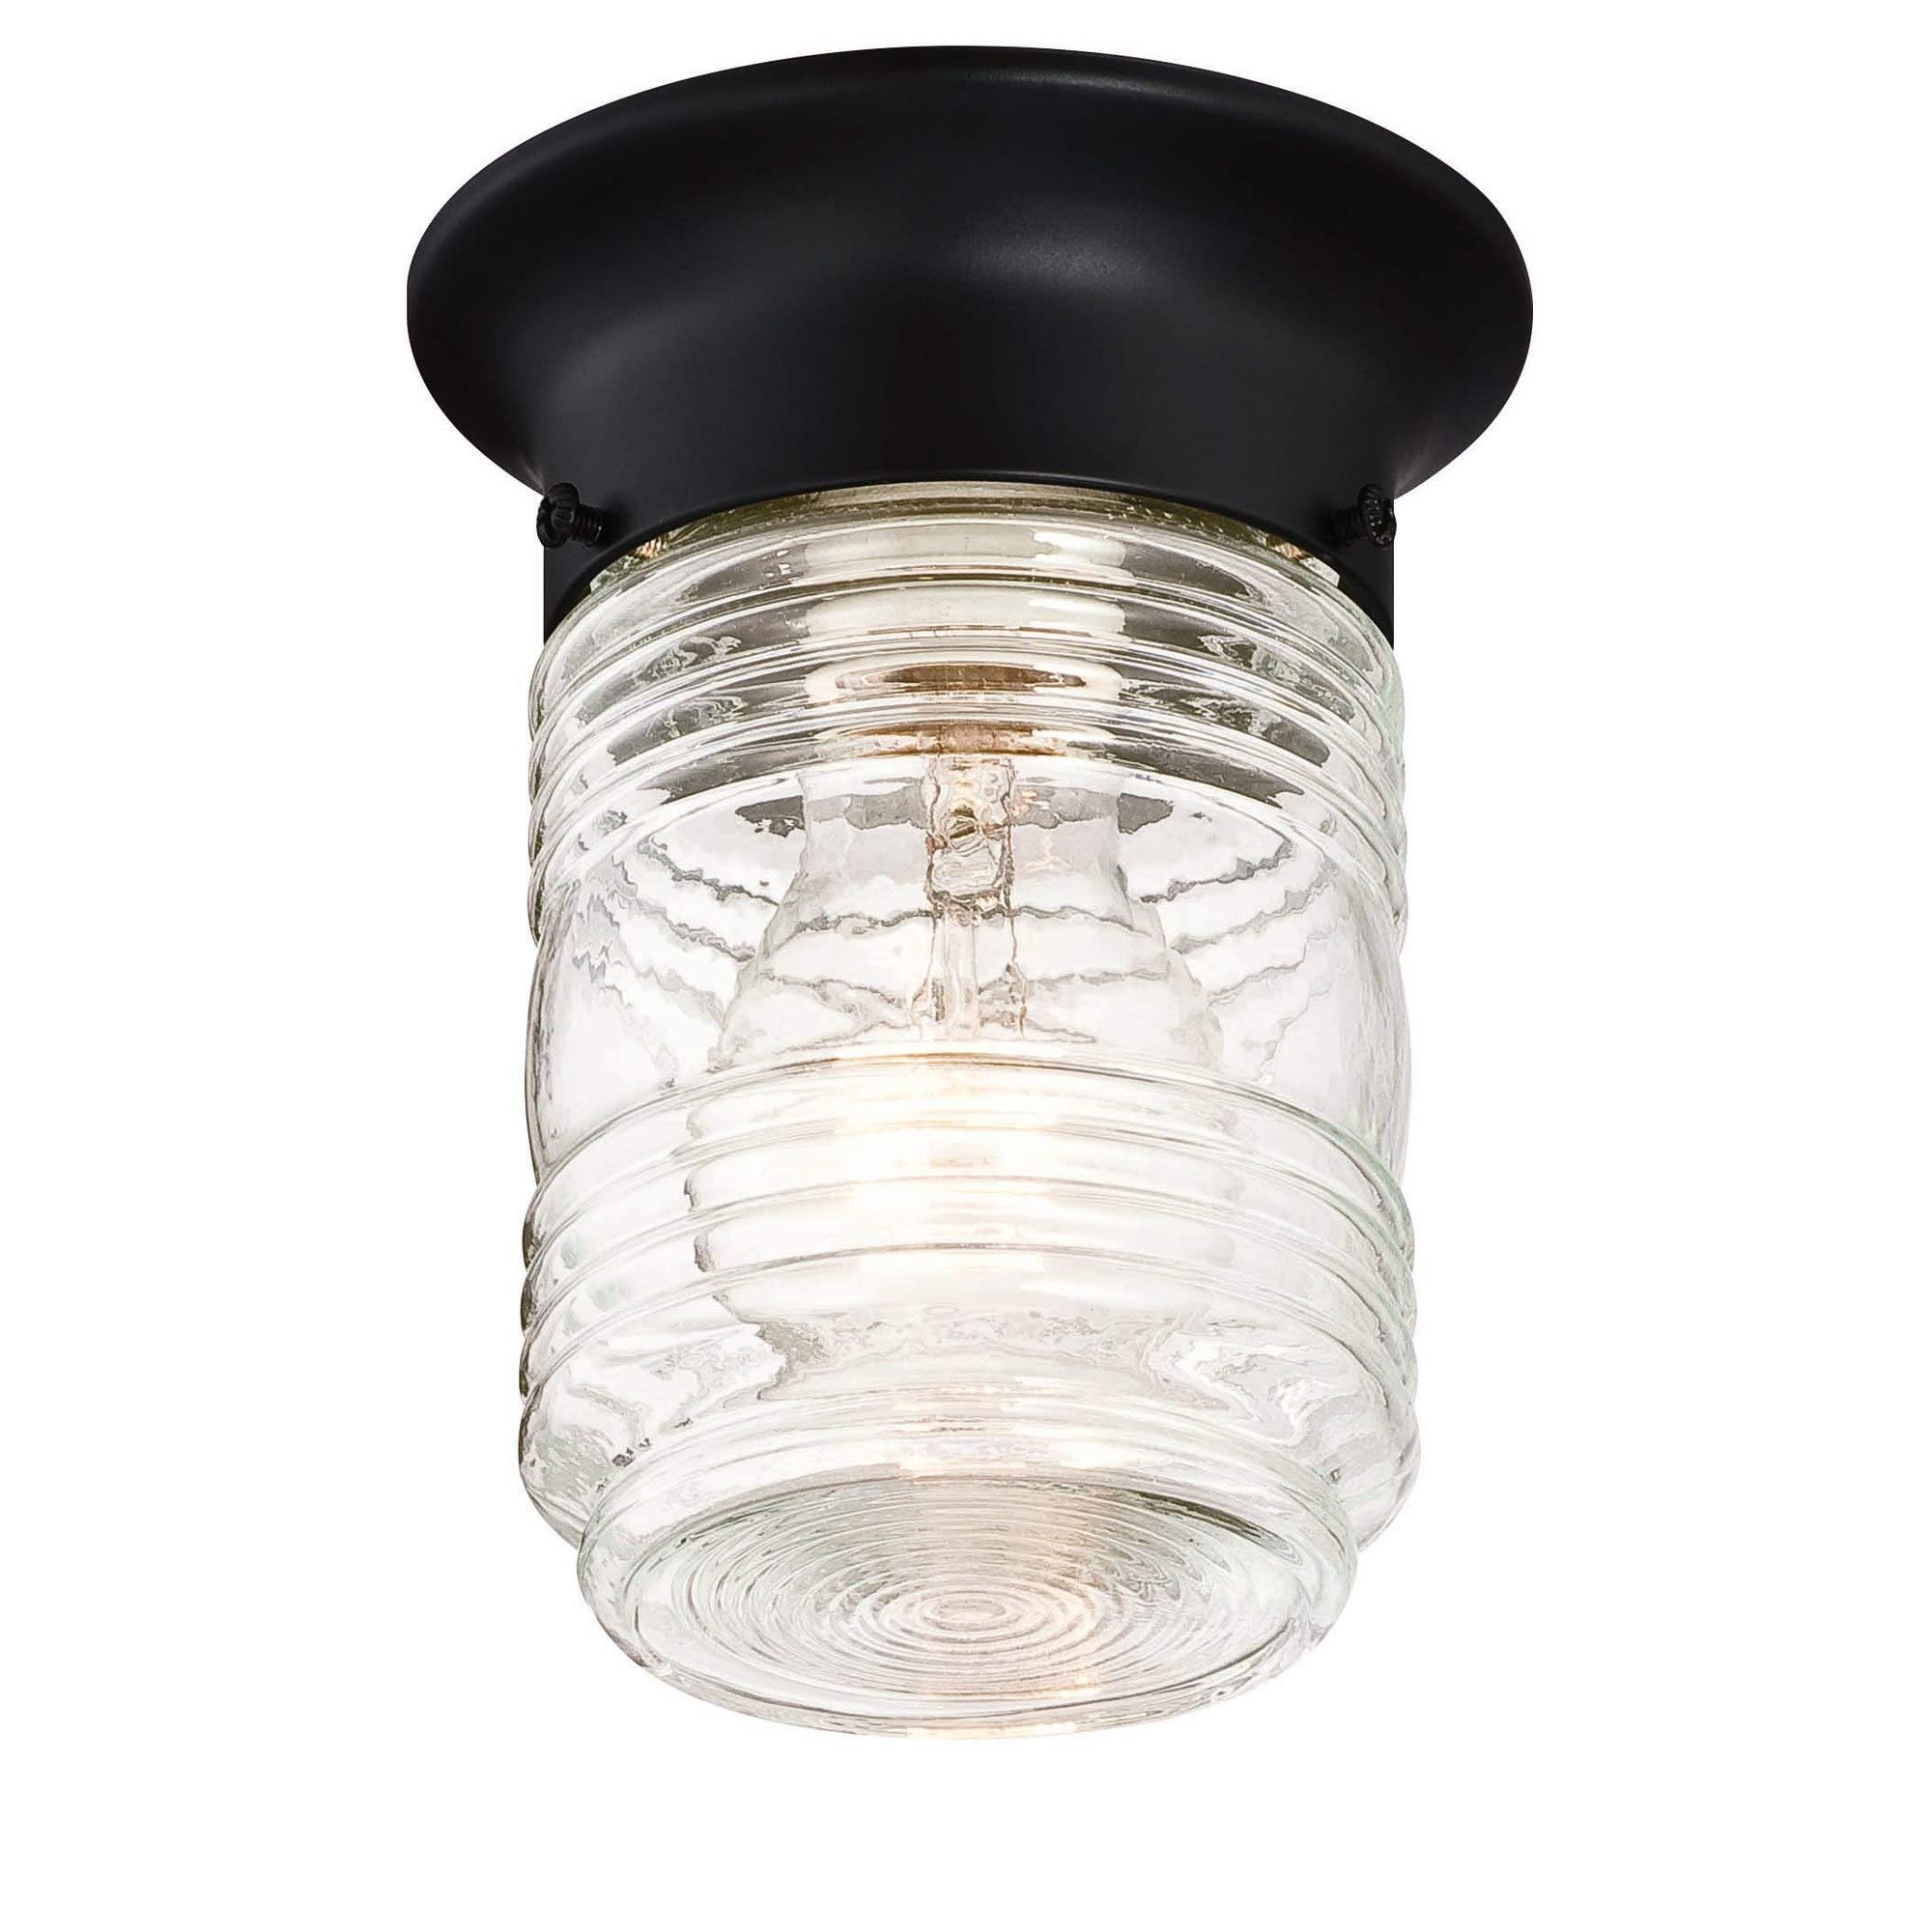 Design House 587220 Jelly Jar 1-Light Indoor/Outdoor Flush Mount Ceiling Light, Black